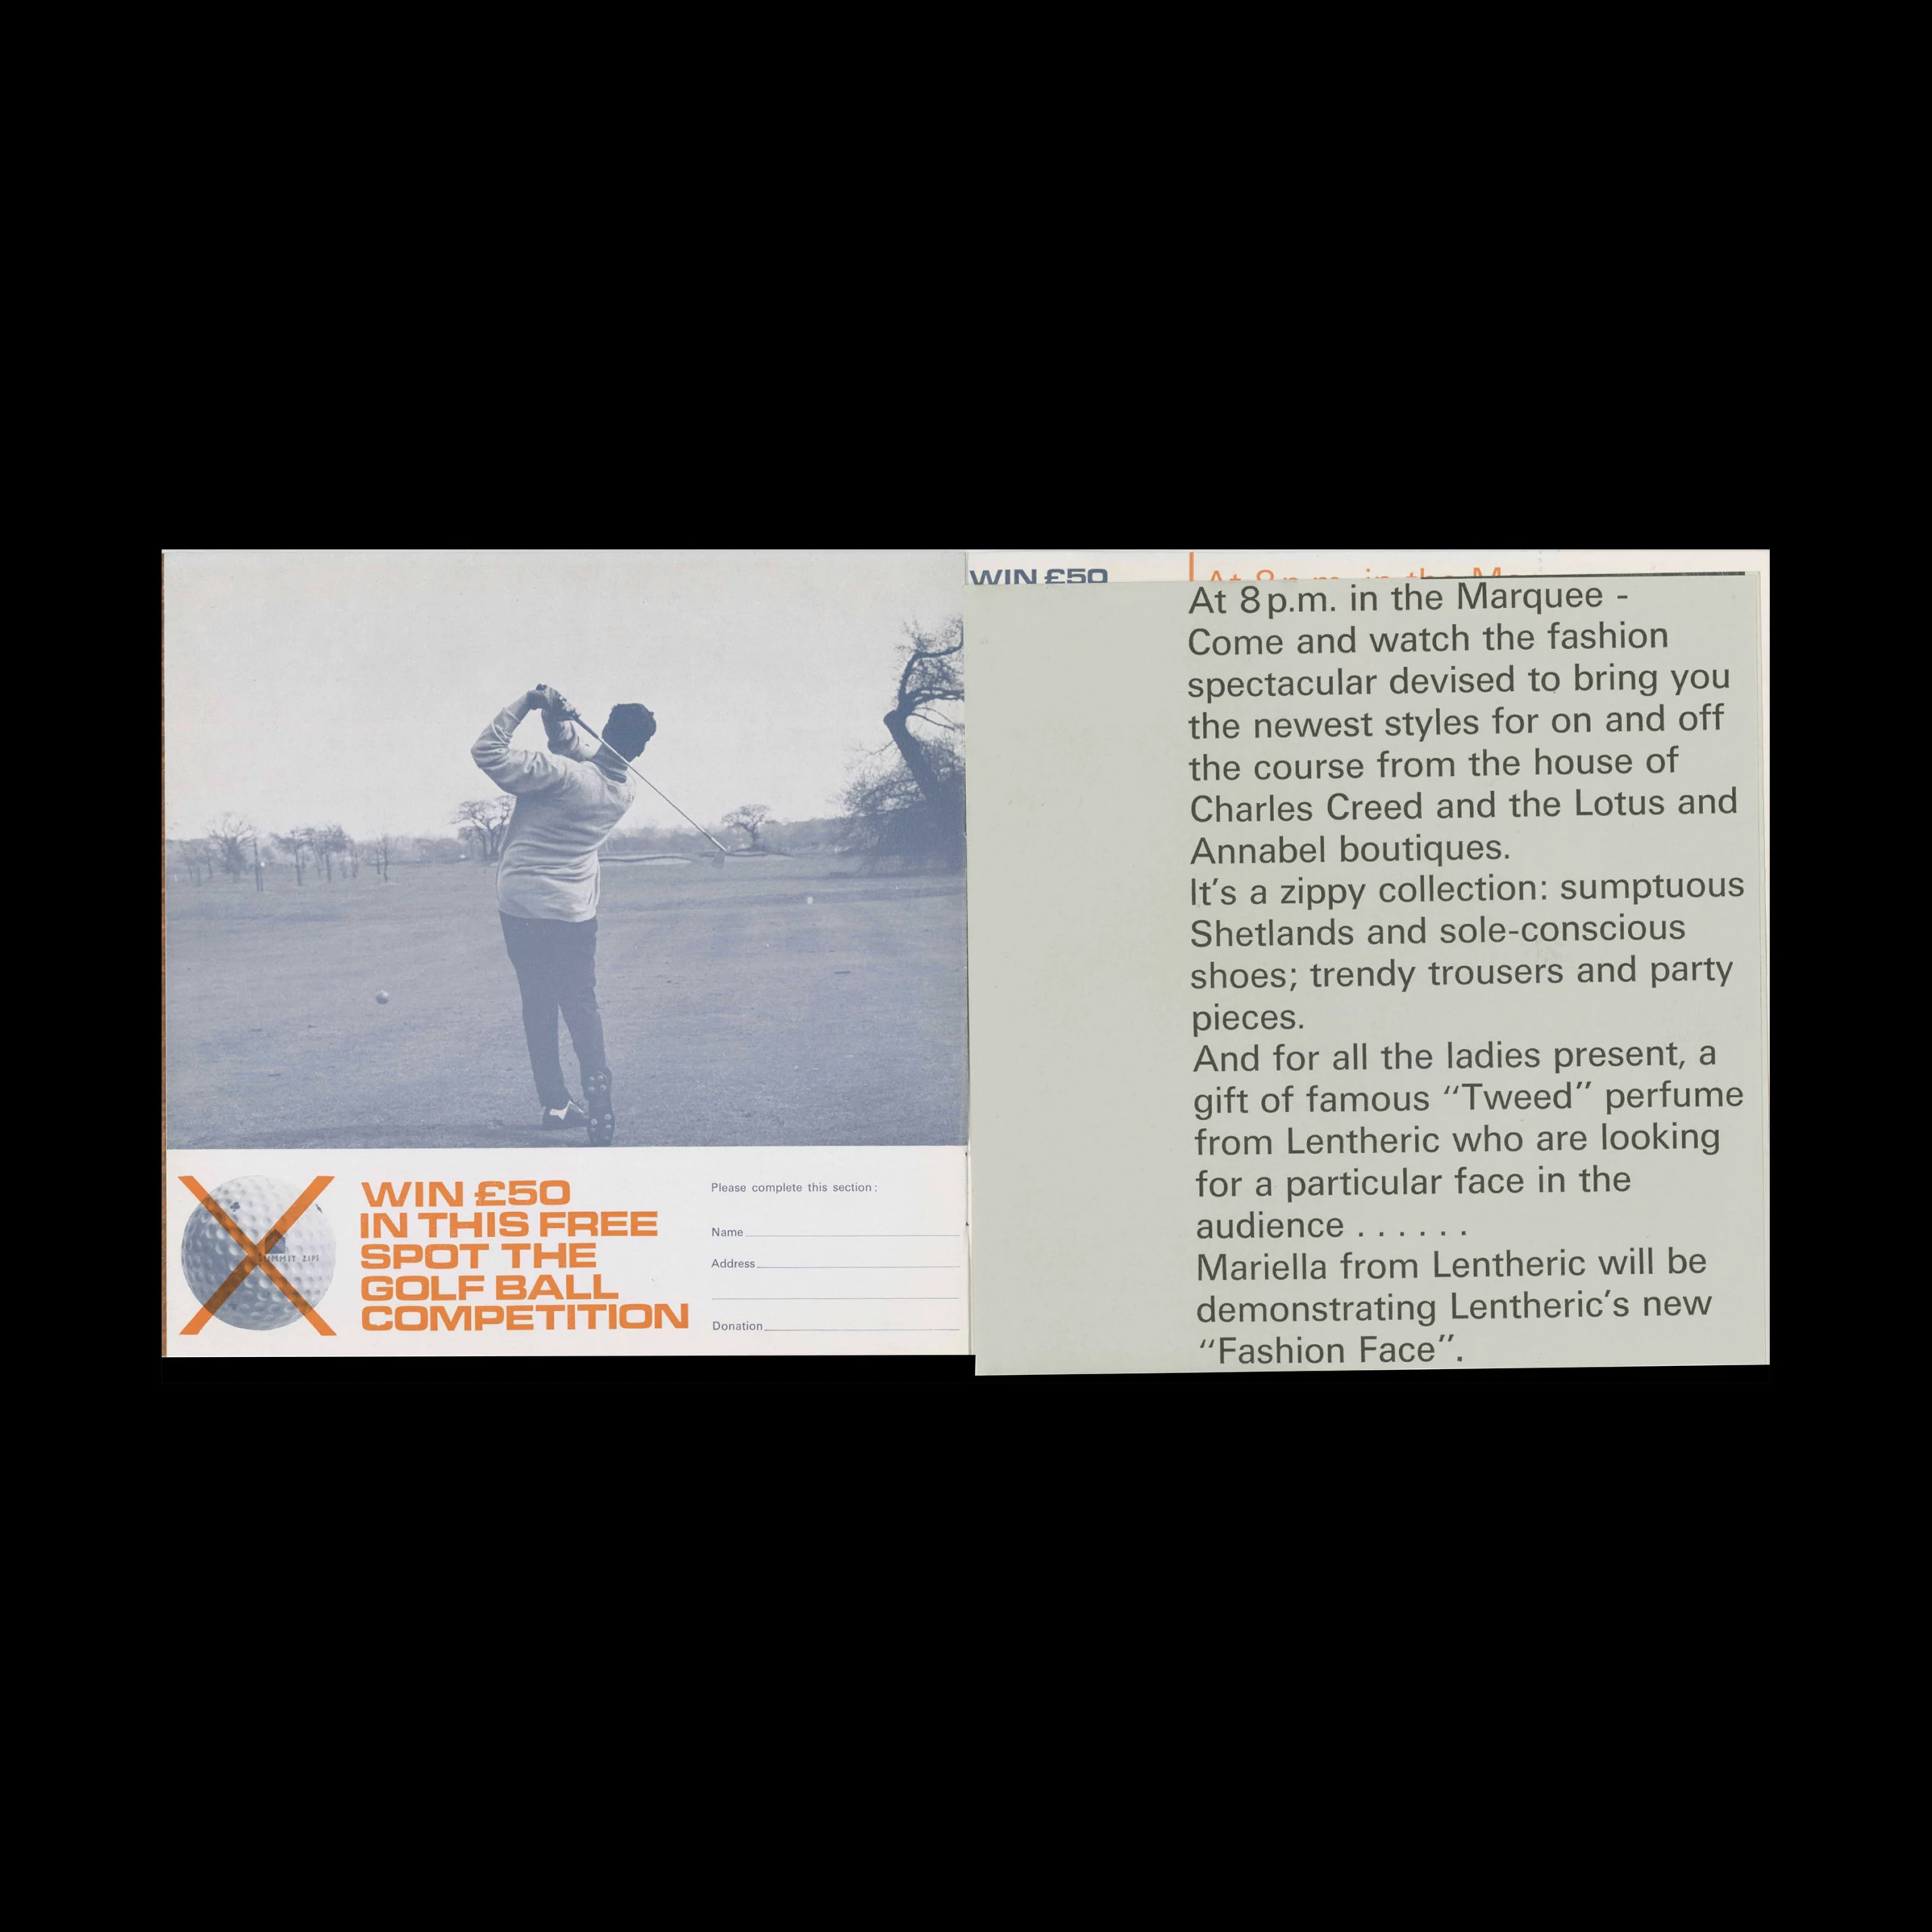 Summit Zip £2,000 Golf Tournament Programme, Walsall Golf Club, 1969